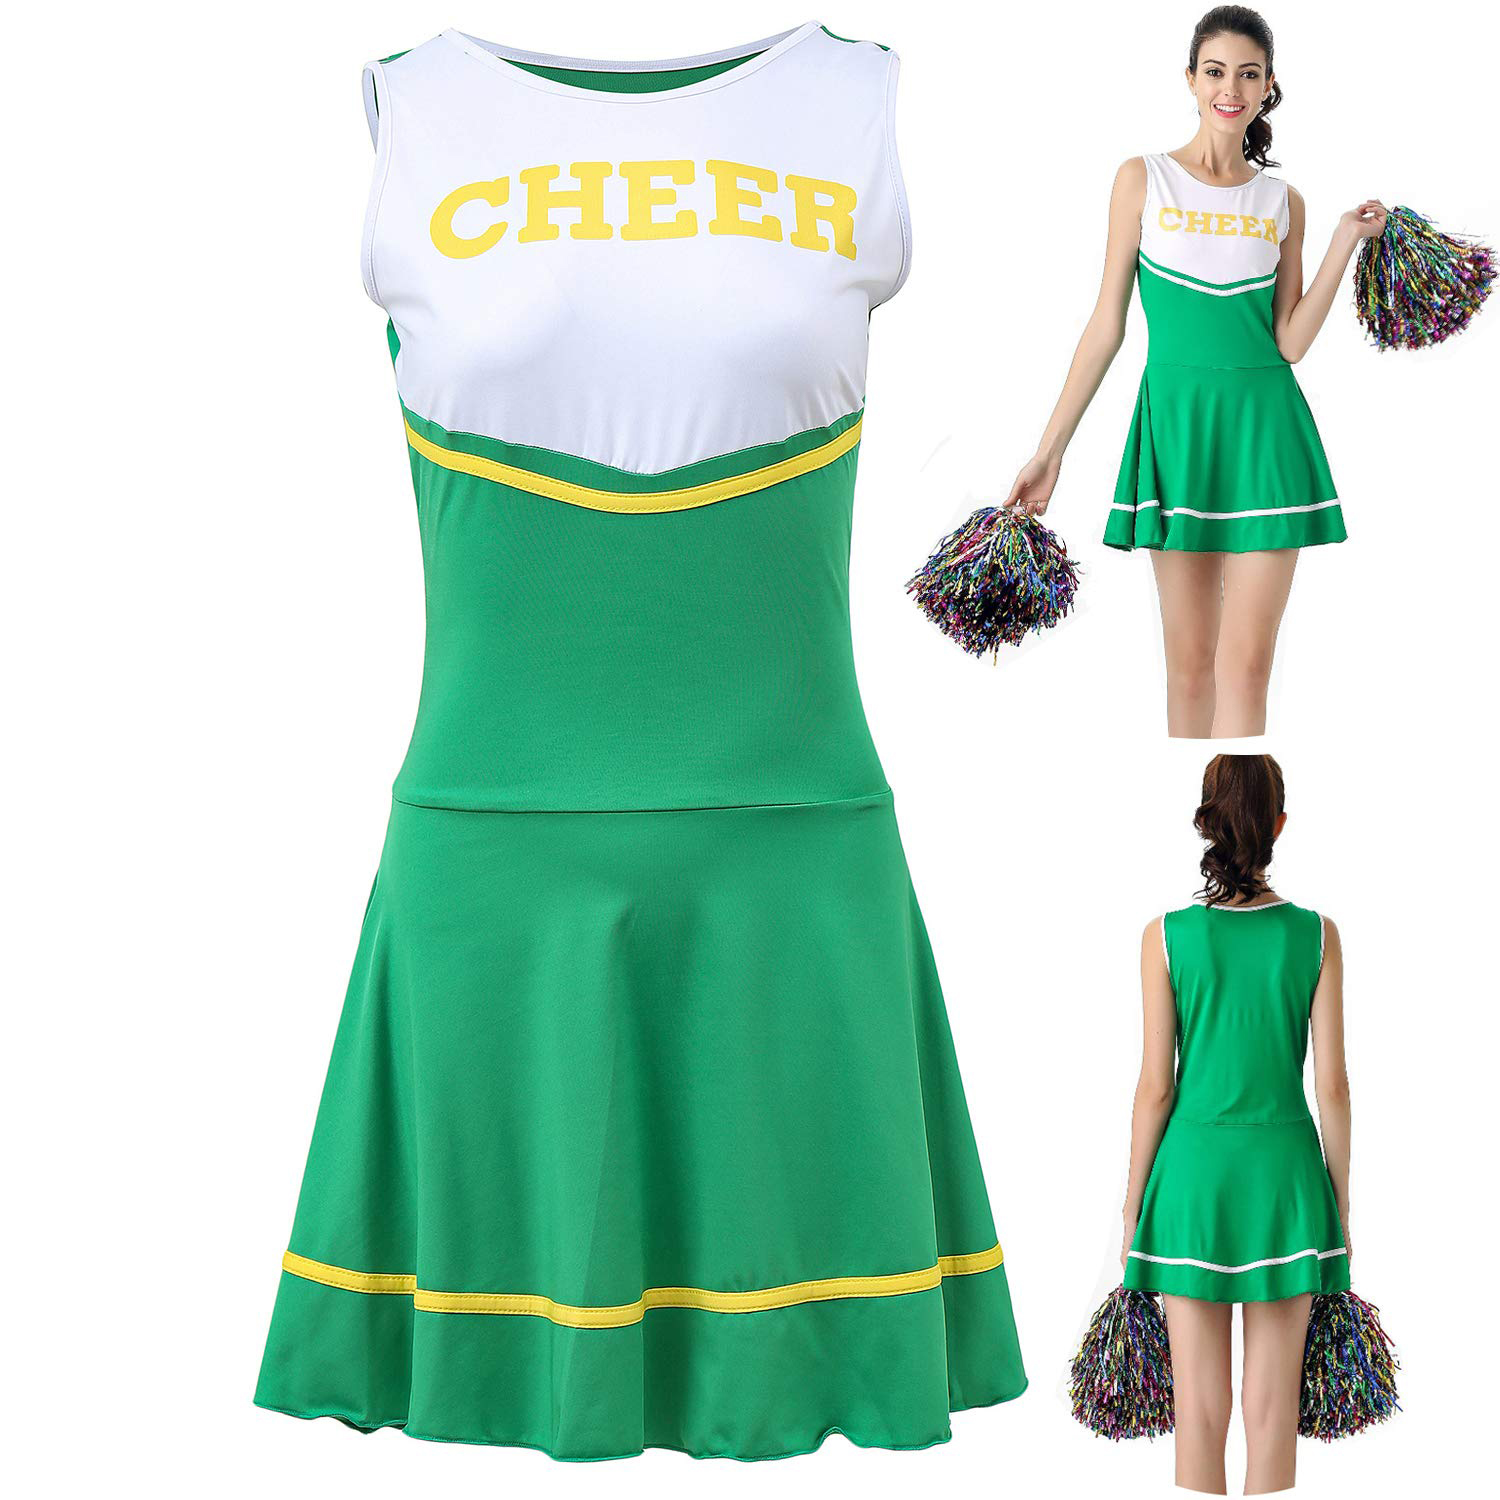 Fato de Cheerleader Verde Fantasia Fantasia High School Musical Cheerleader Uniforme Sem Pom-Pom